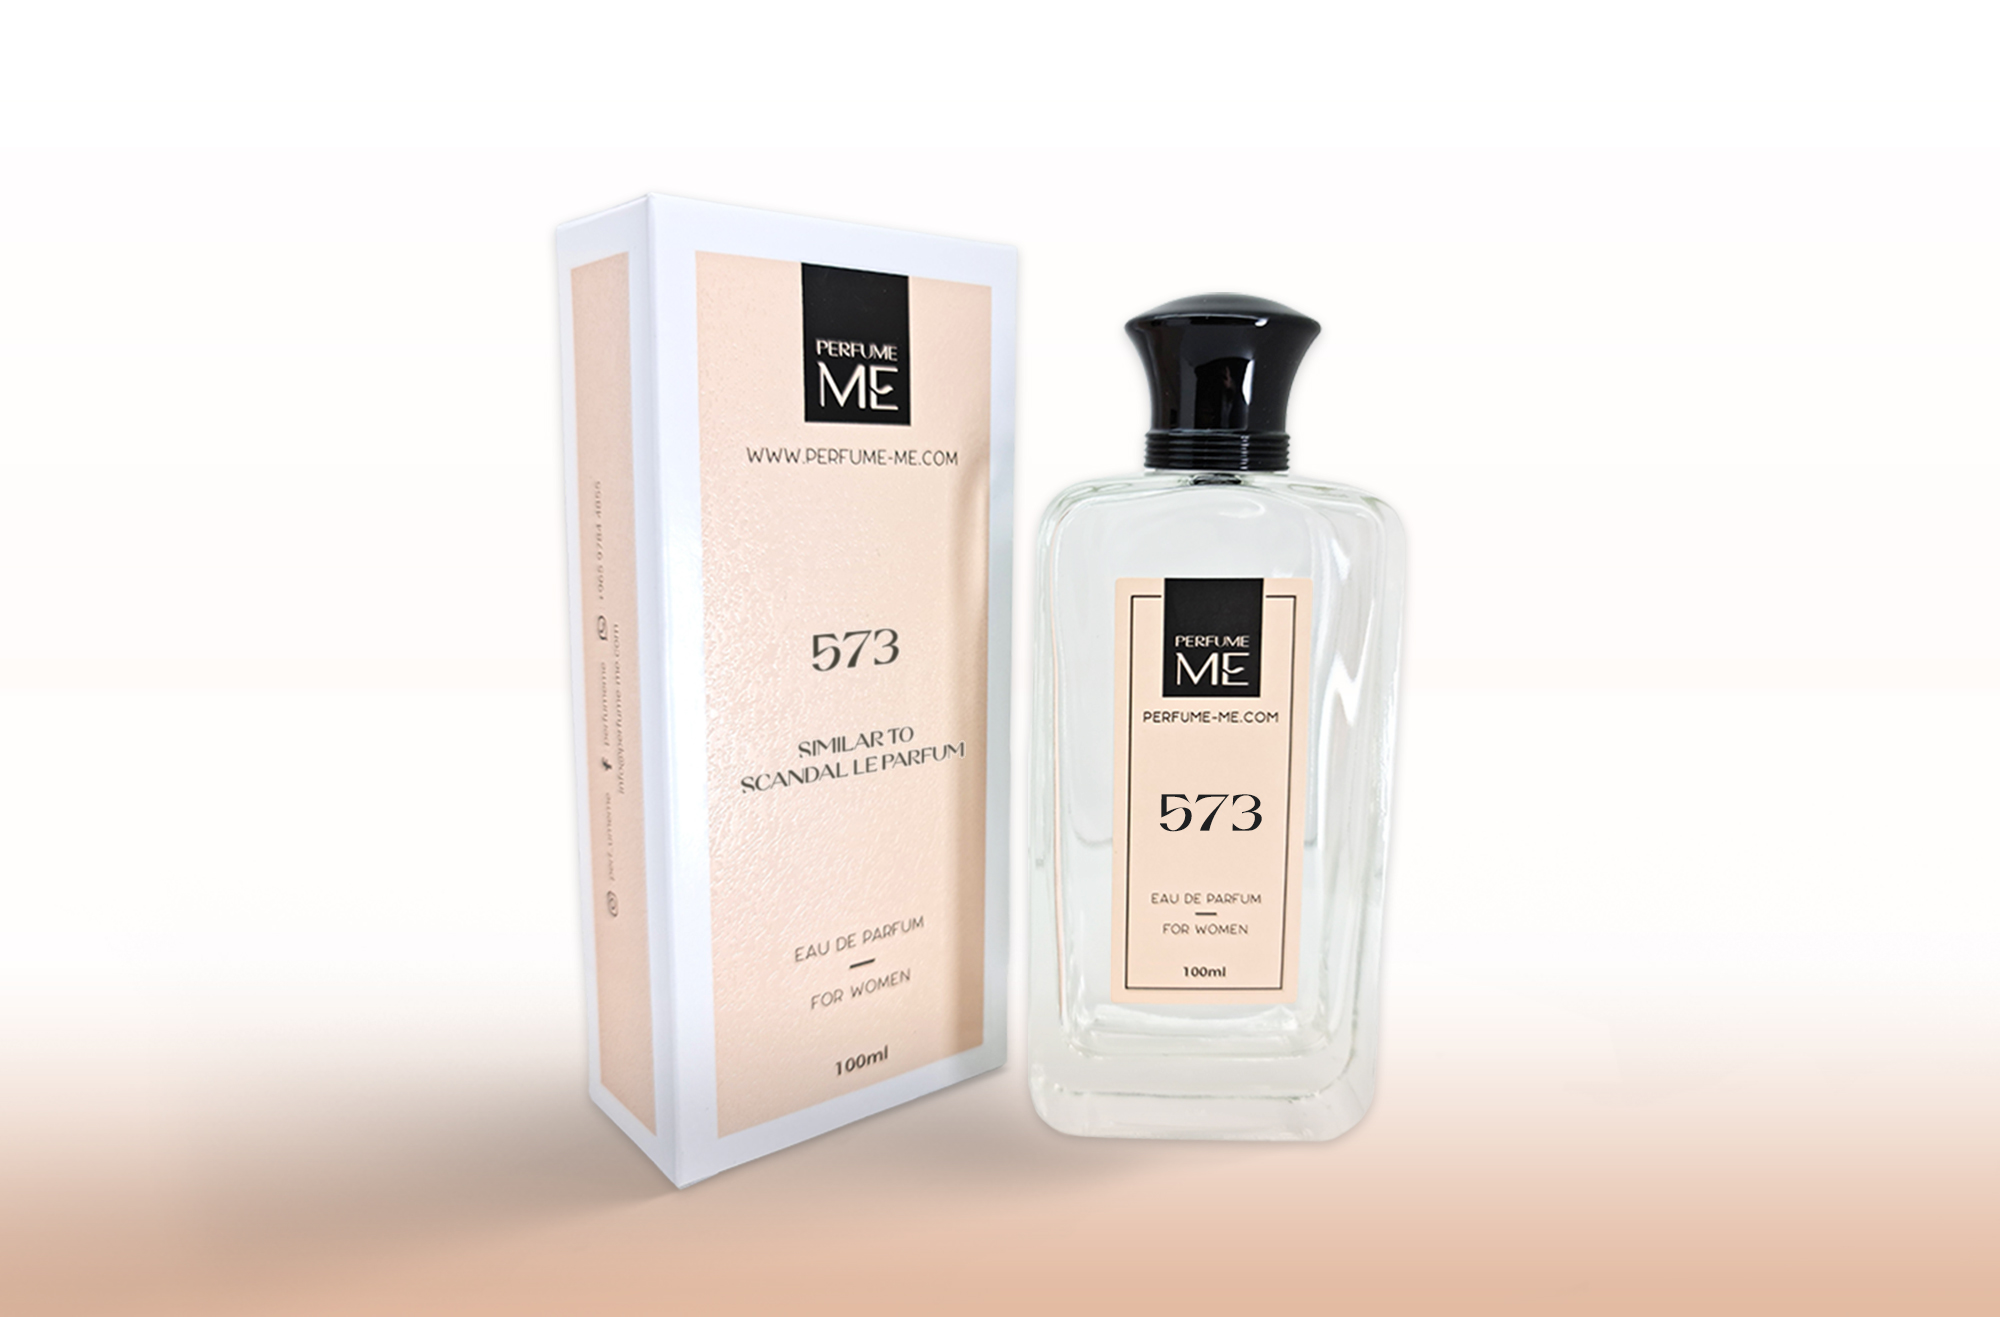 Perfume ME 573: Similar to – Scandal Jean PERFUME Paul Parfum Le by عطرني Gaultier – ME